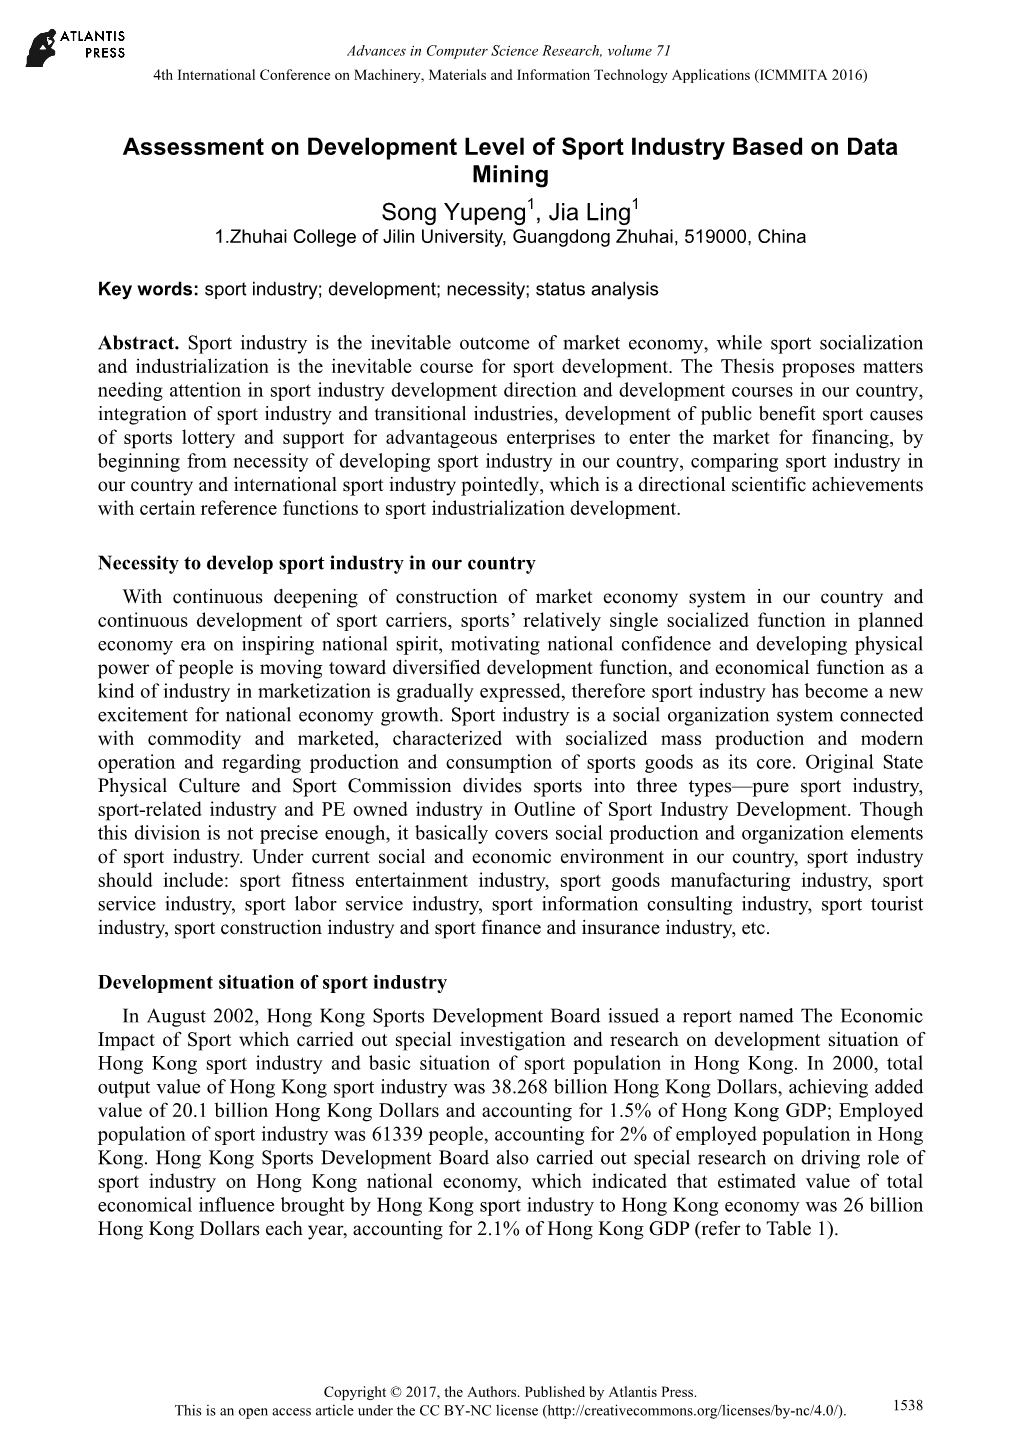 Assessment on Development Level of Sport Industry Based on Data Mining Song Yupeng1, Jia Ling1 1.Zhuhai College of Jilin University, Guangdong Zhuhai, 519000, China